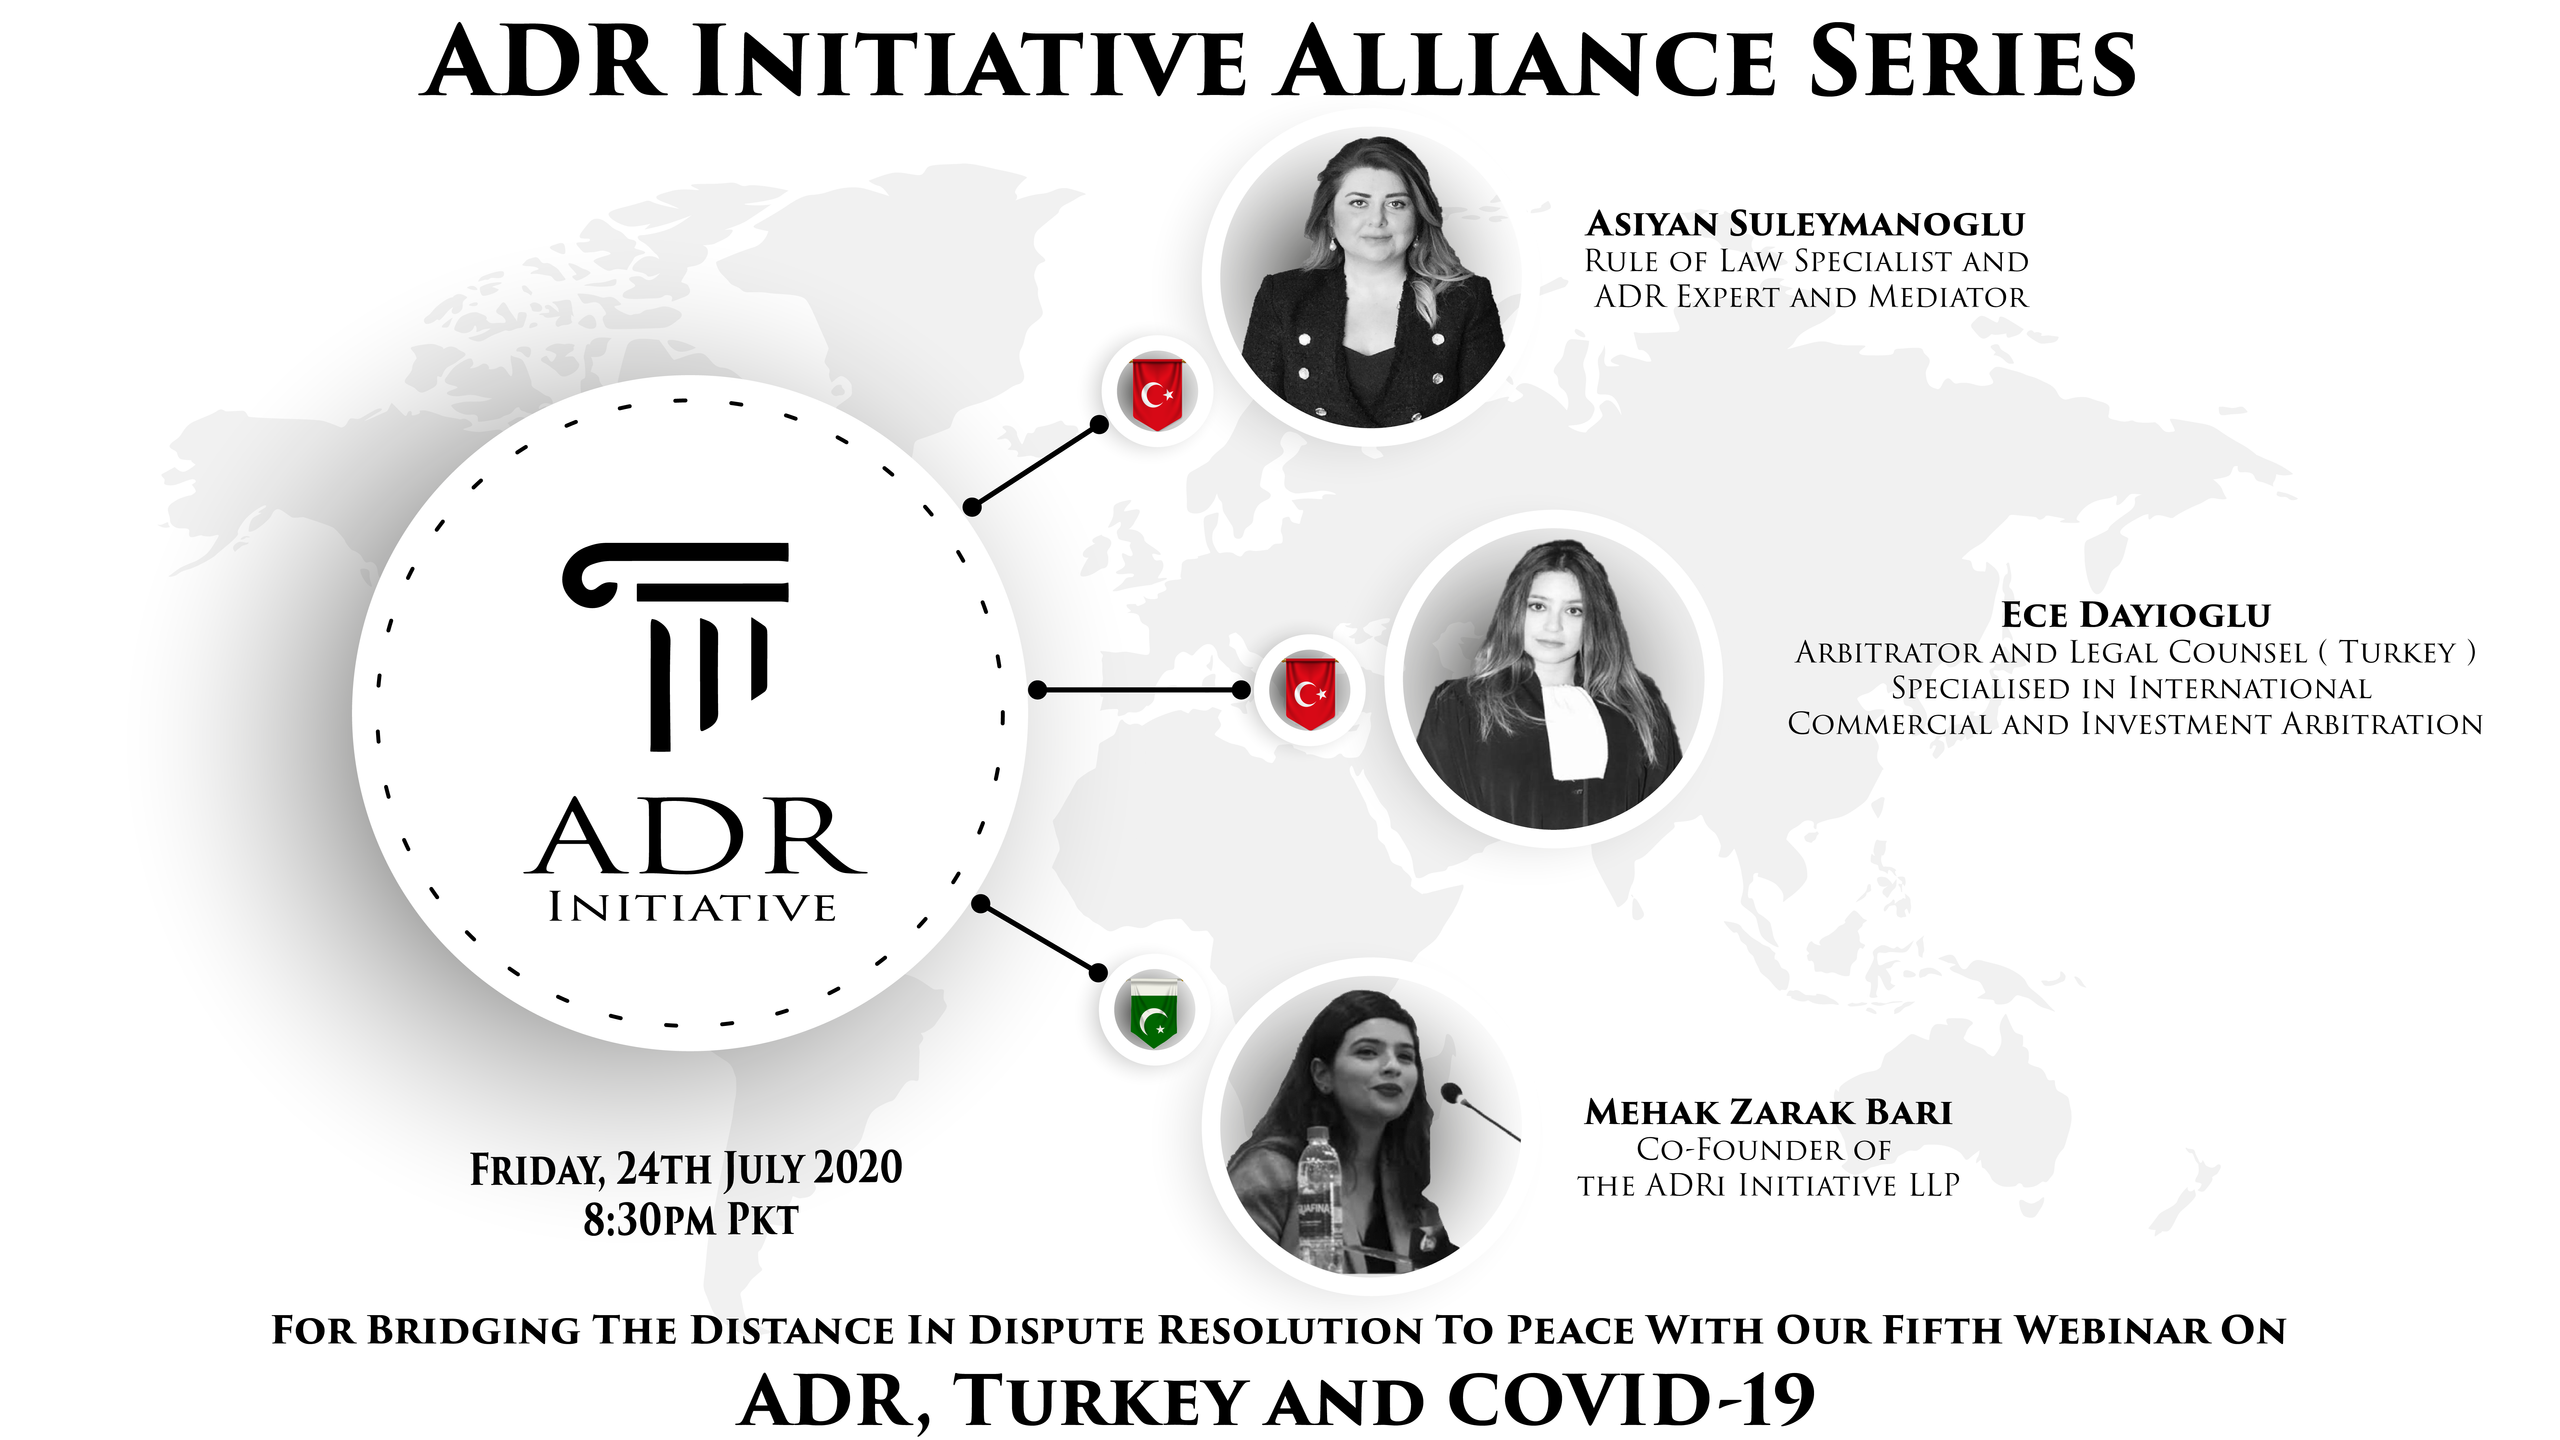 Alliance Series - ADR, Turkey & COVID-19